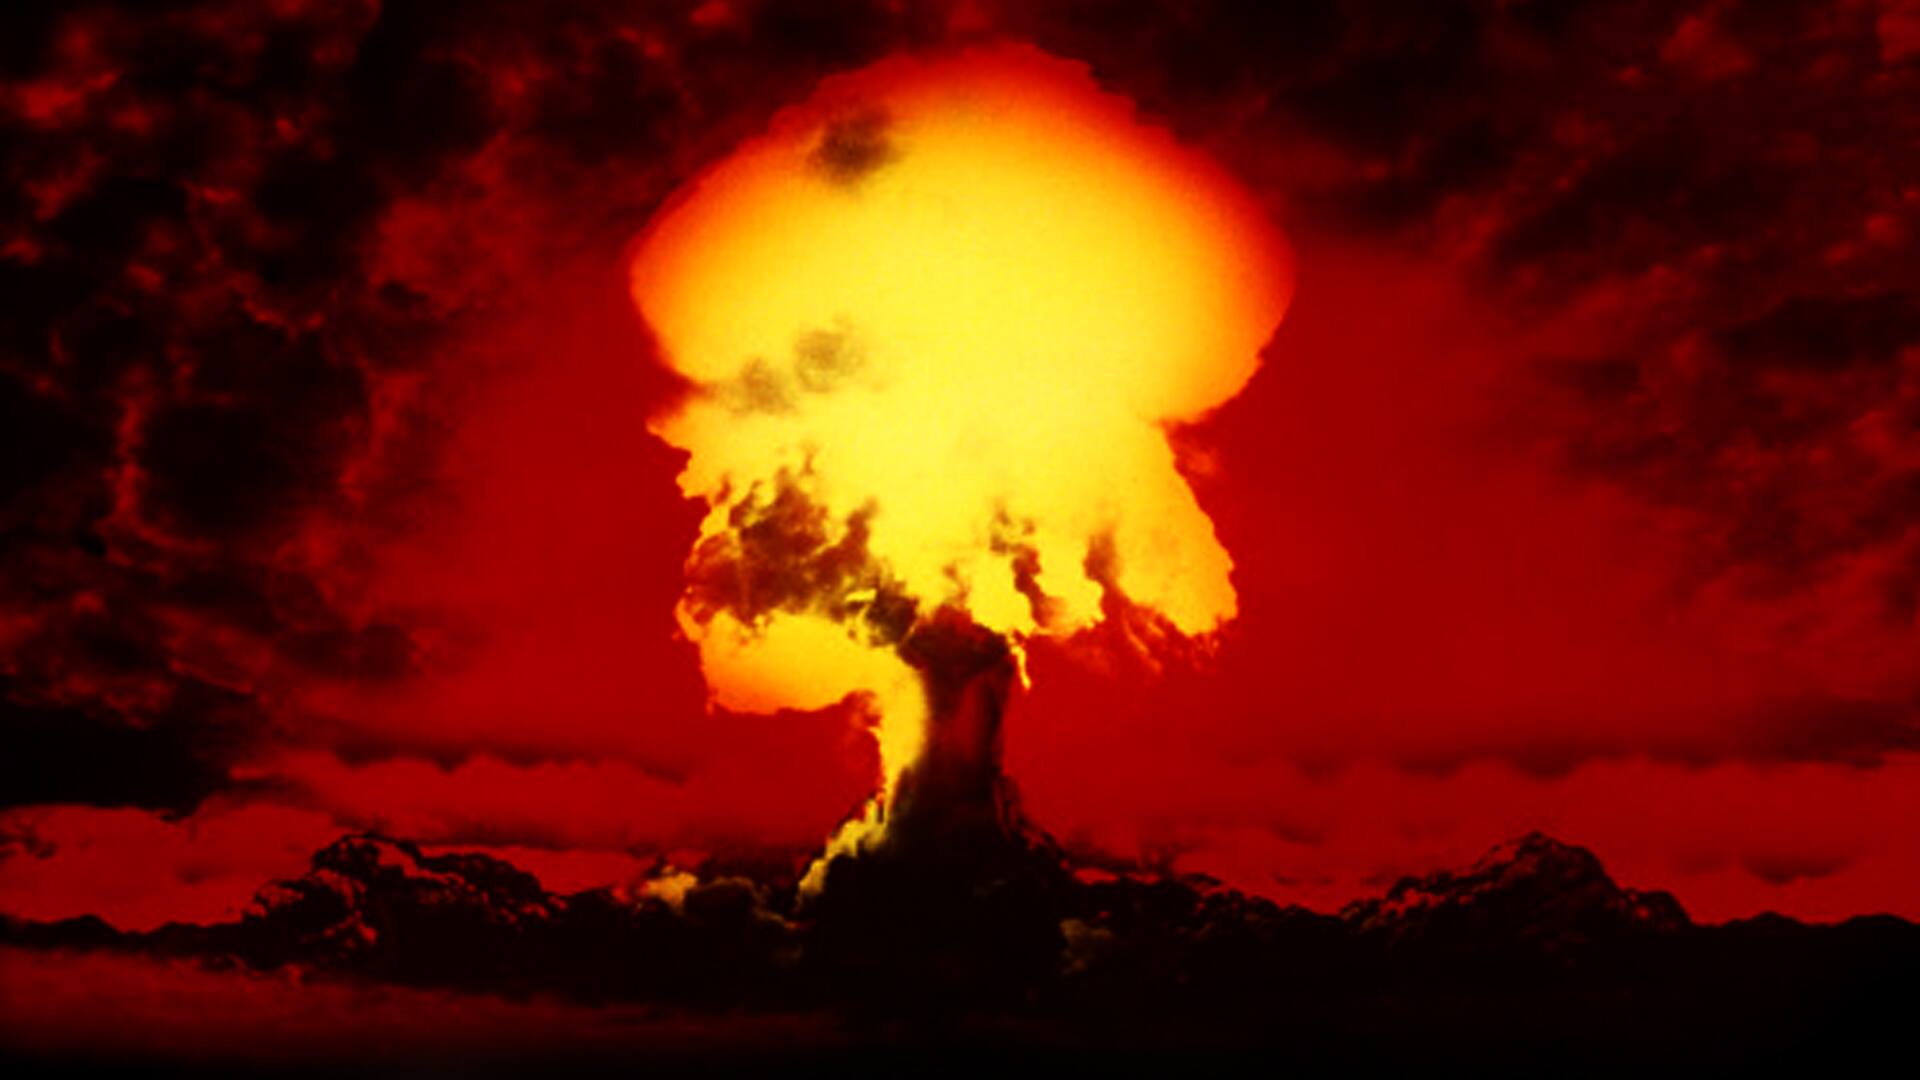 Hiroshima & Nagasaki nuclear bombing in WWII: World observes 73rd anniversary